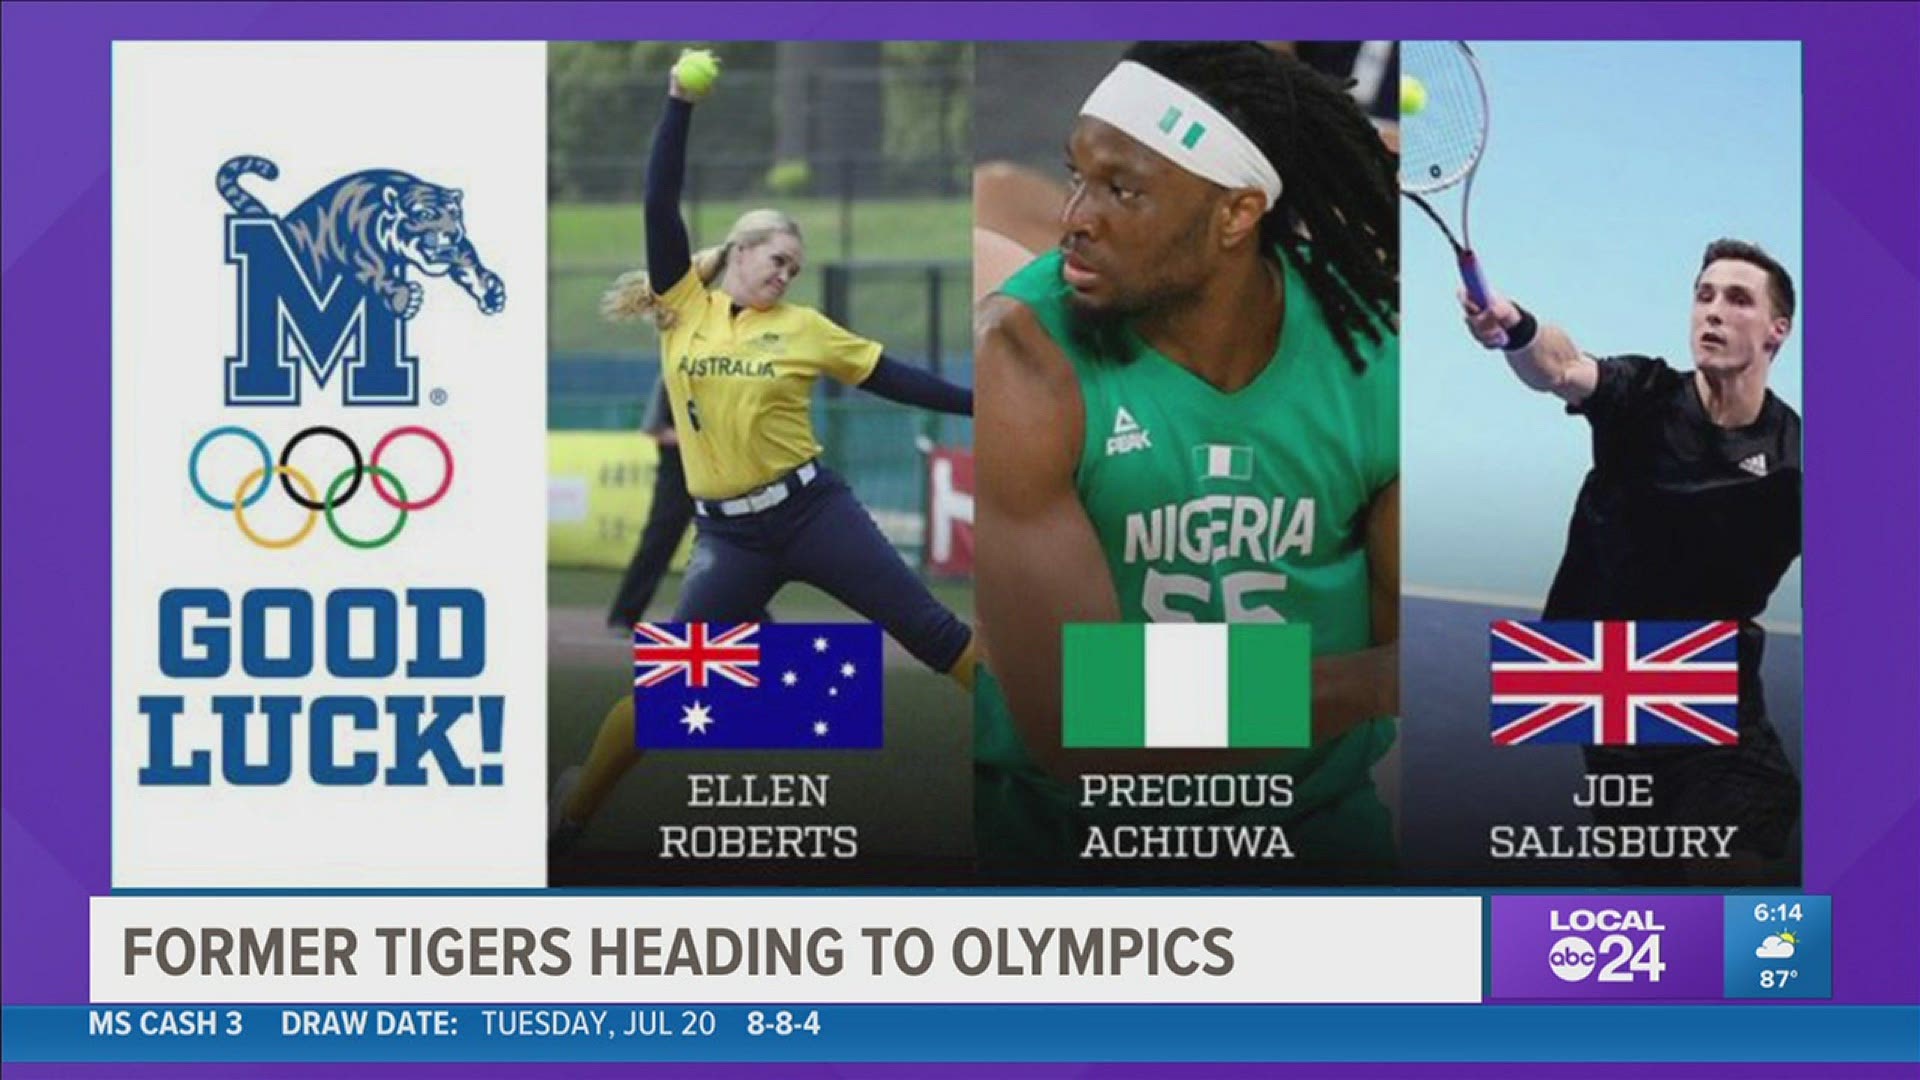 Precious Achiuwa is part of Nigerian Men’s Basketball team, Ellen Roberts plays for Australia’s Softball team, & Joe Salisbury will represent Great Britain in tennis